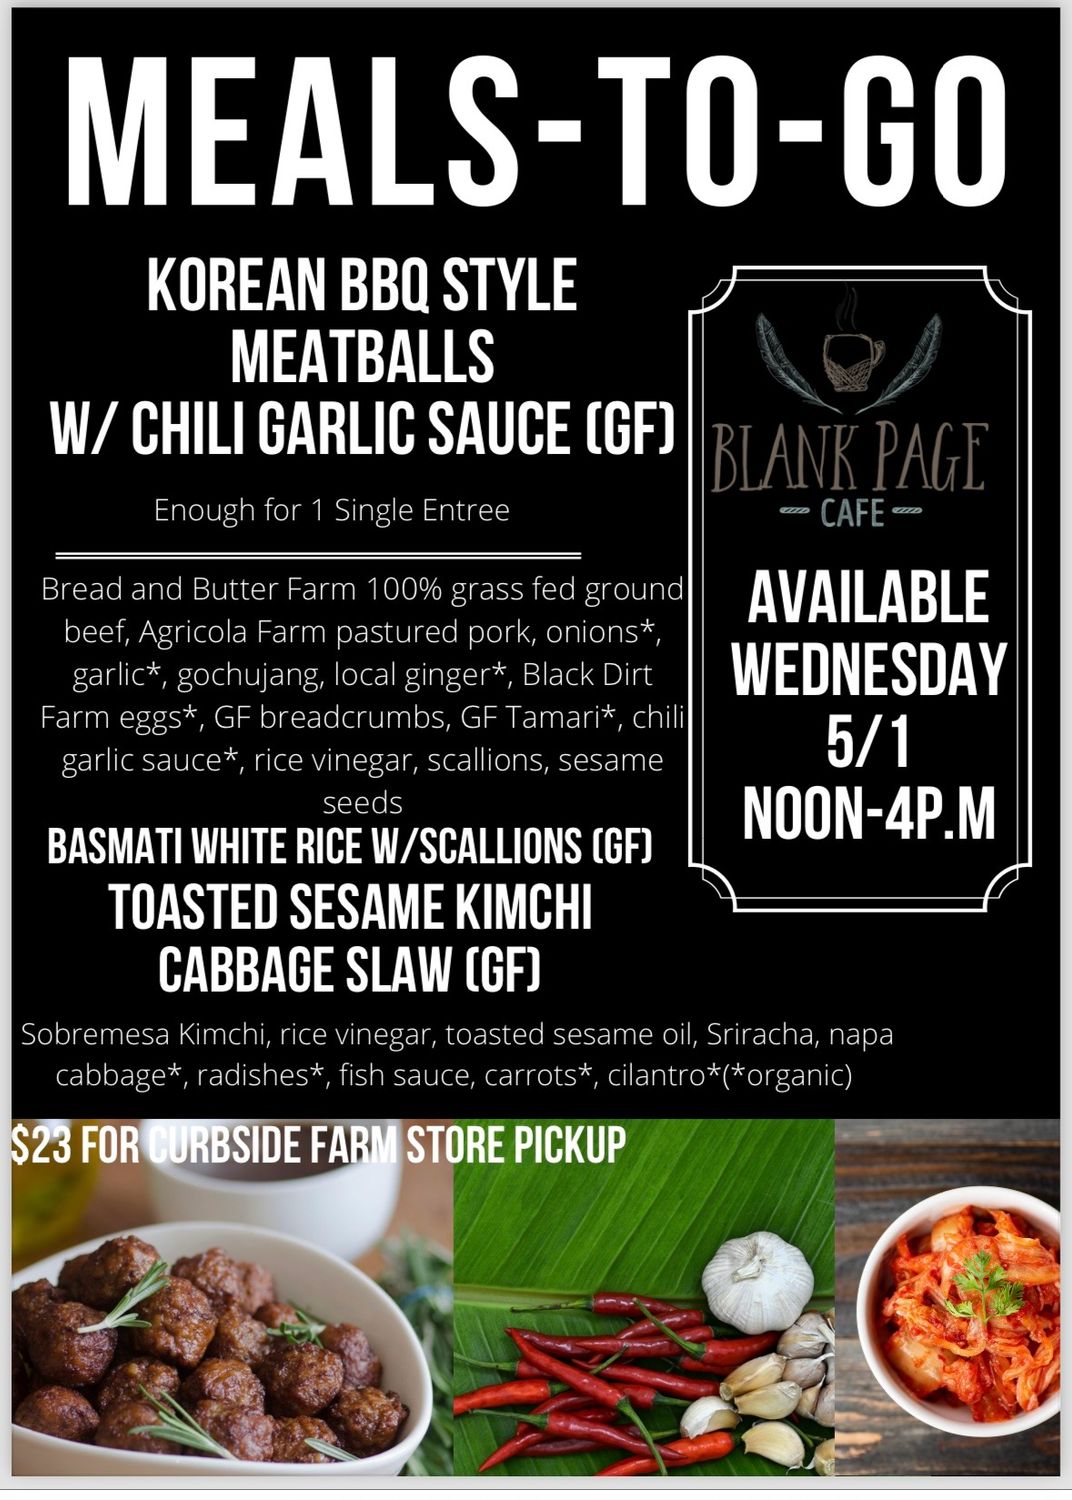 Wednesday 5/01 NOON-4PM PICKUP - Korean BBQ Style Meatballs W/Chili Garlic Sauce + Basmati White Rice W/Scallions + Crunchy Toasted Sesame Kimchi Cabbage Slaw